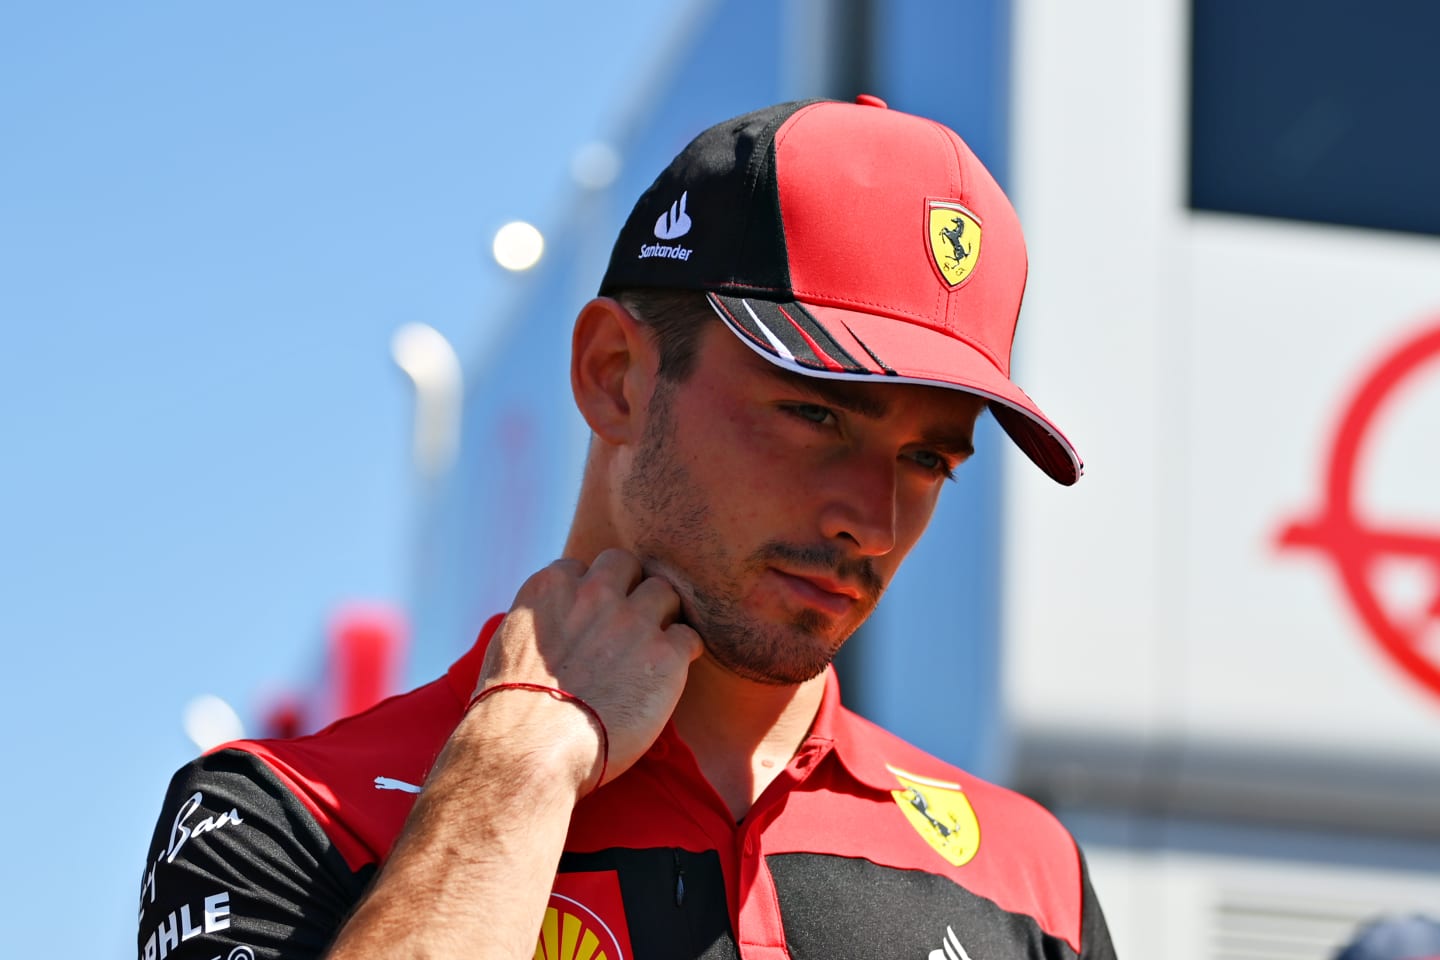 LE CASTELLET, FRANCE - JULY 24: Charles Leclerc of Monaco and Ferrari looks dejected as he walks in